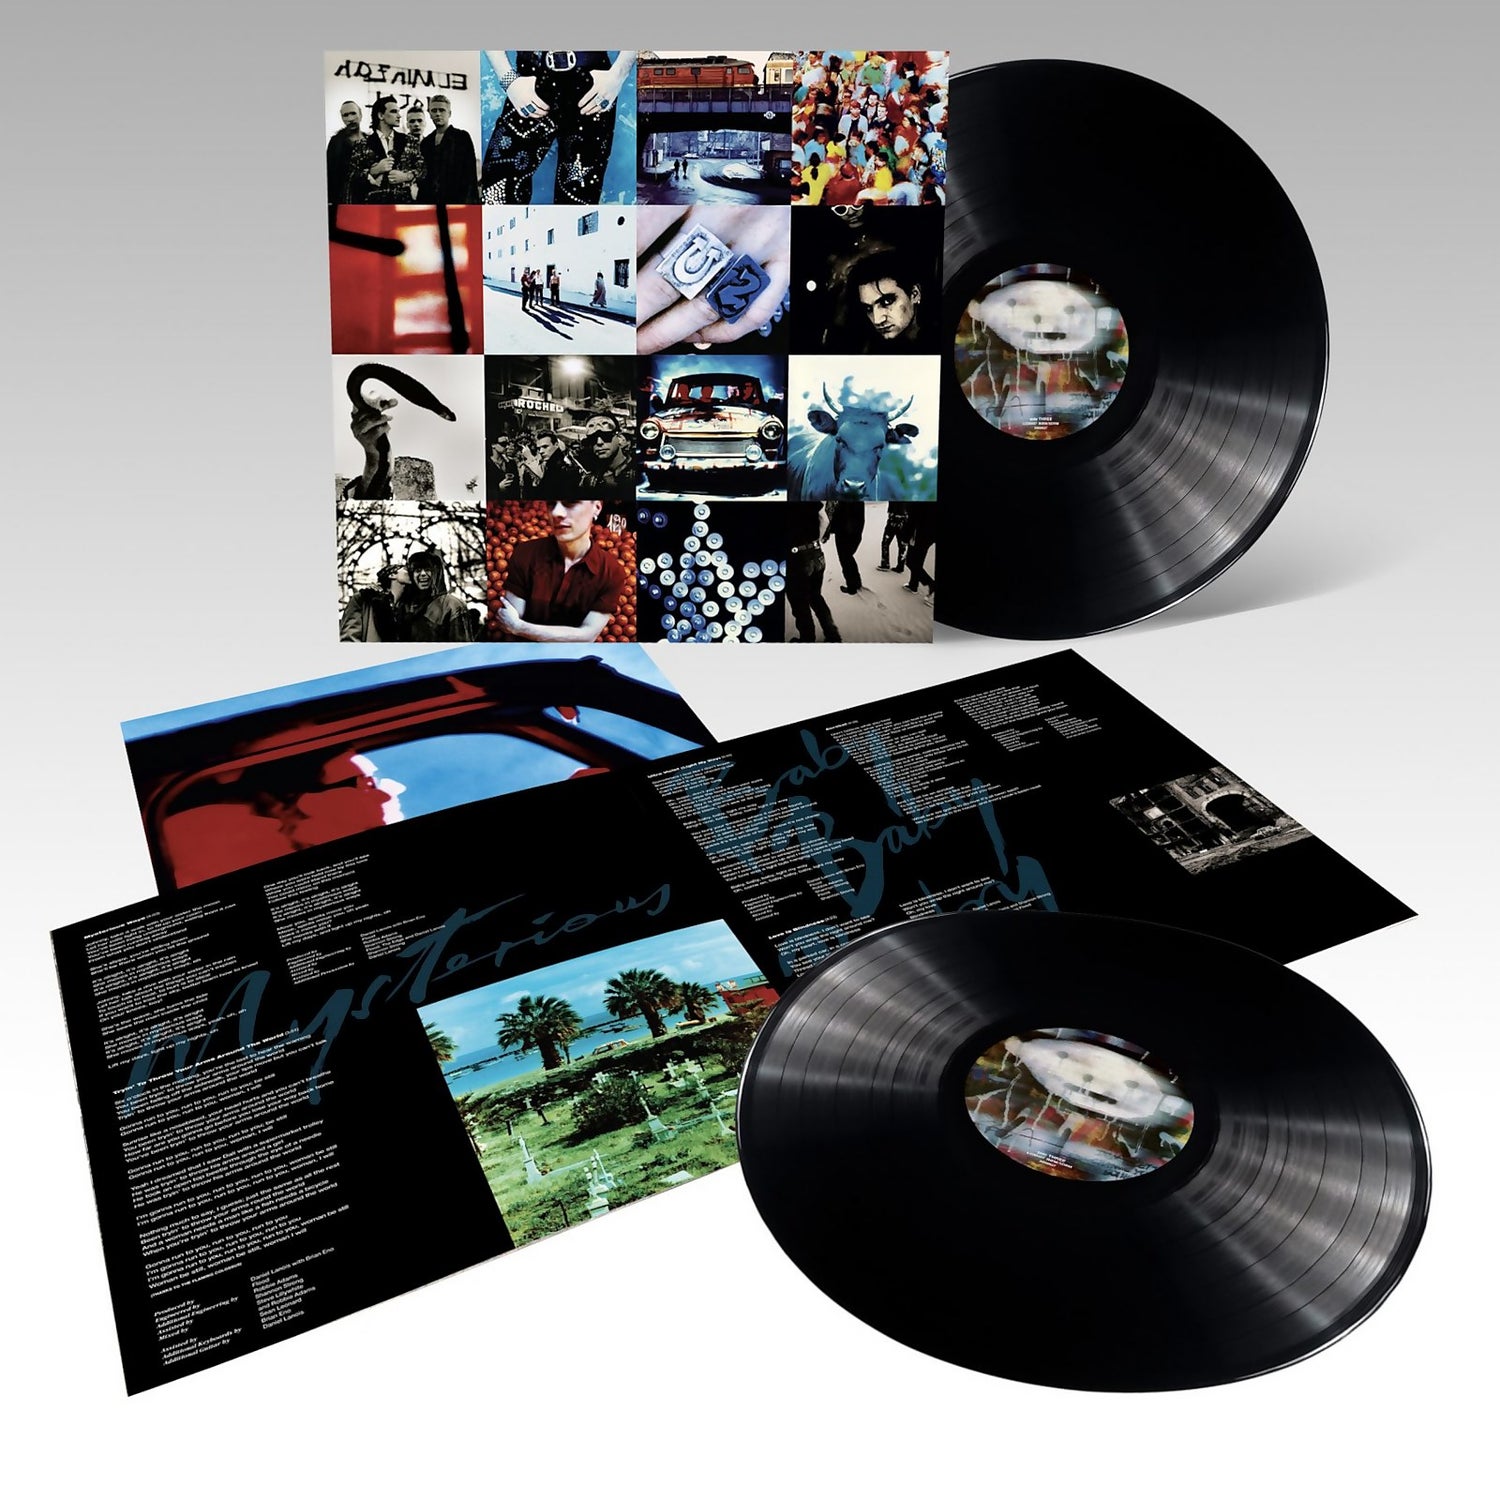 U2 - Achtung Baby - 30th Anniversary Edition Vinyl 2LP Limited Edition Black Vinyl + Poster